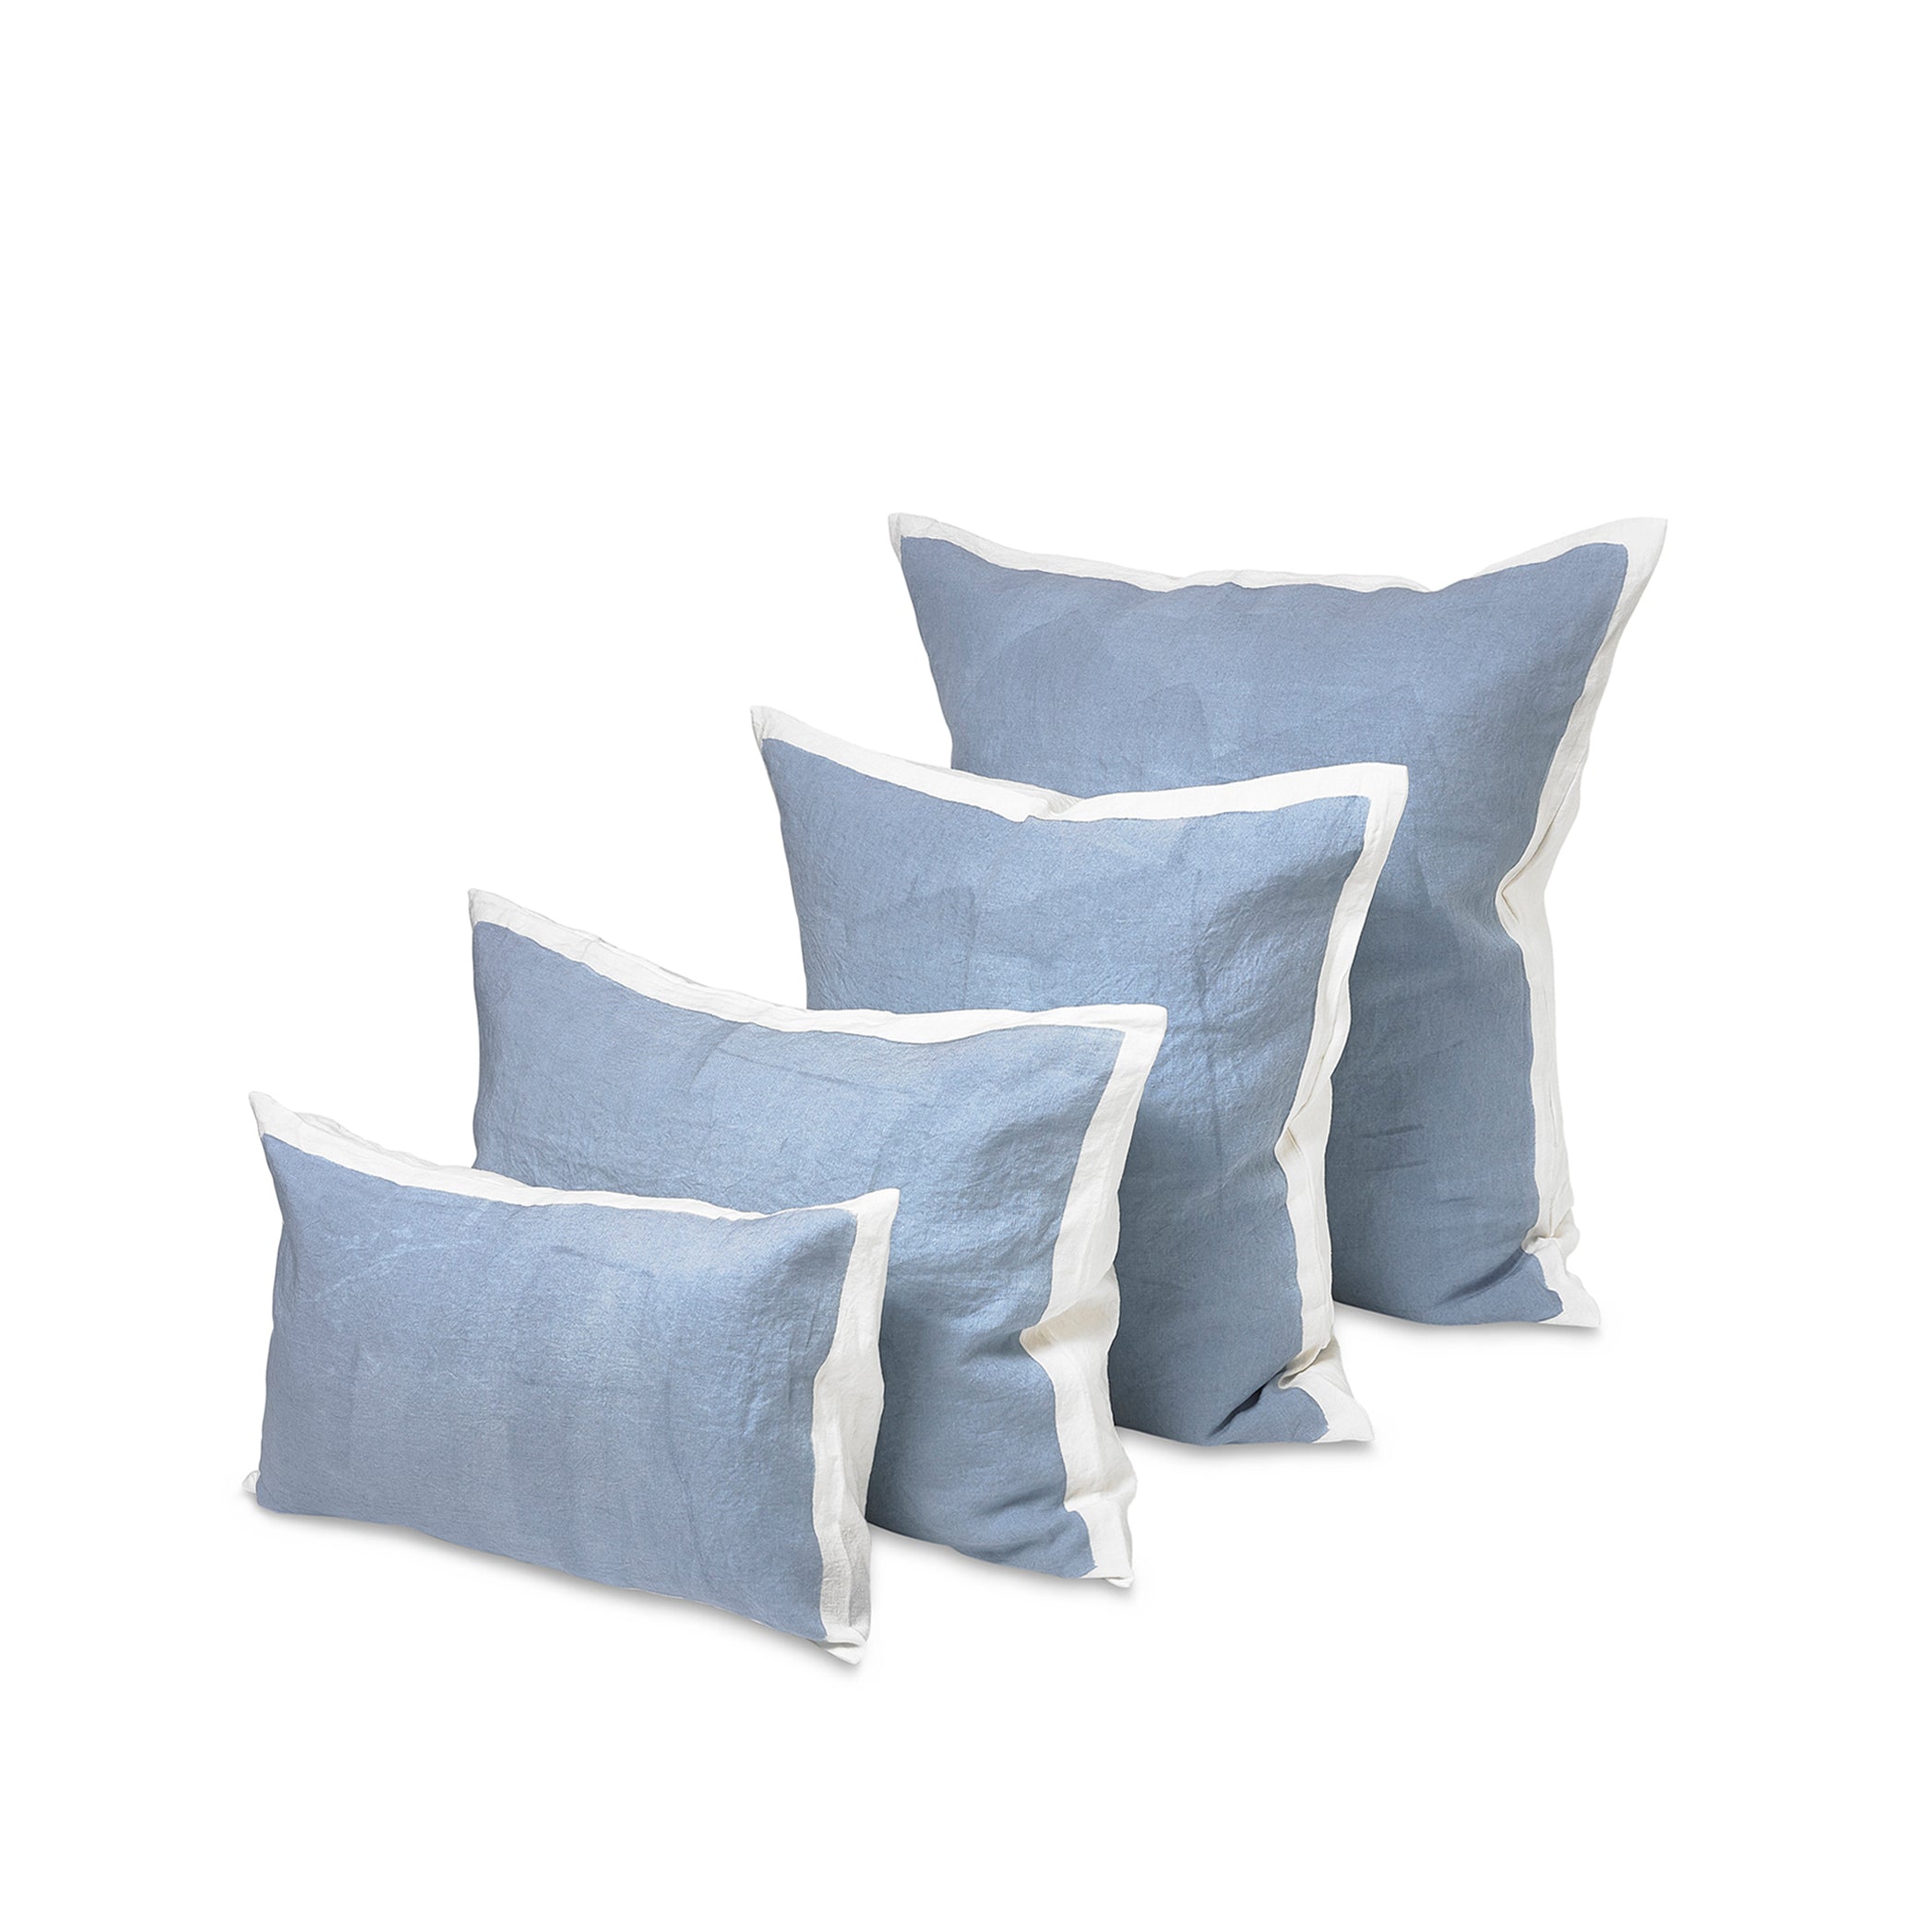 Hand Painted Linen Cushion in Pale Blue, 60cm x 60cm